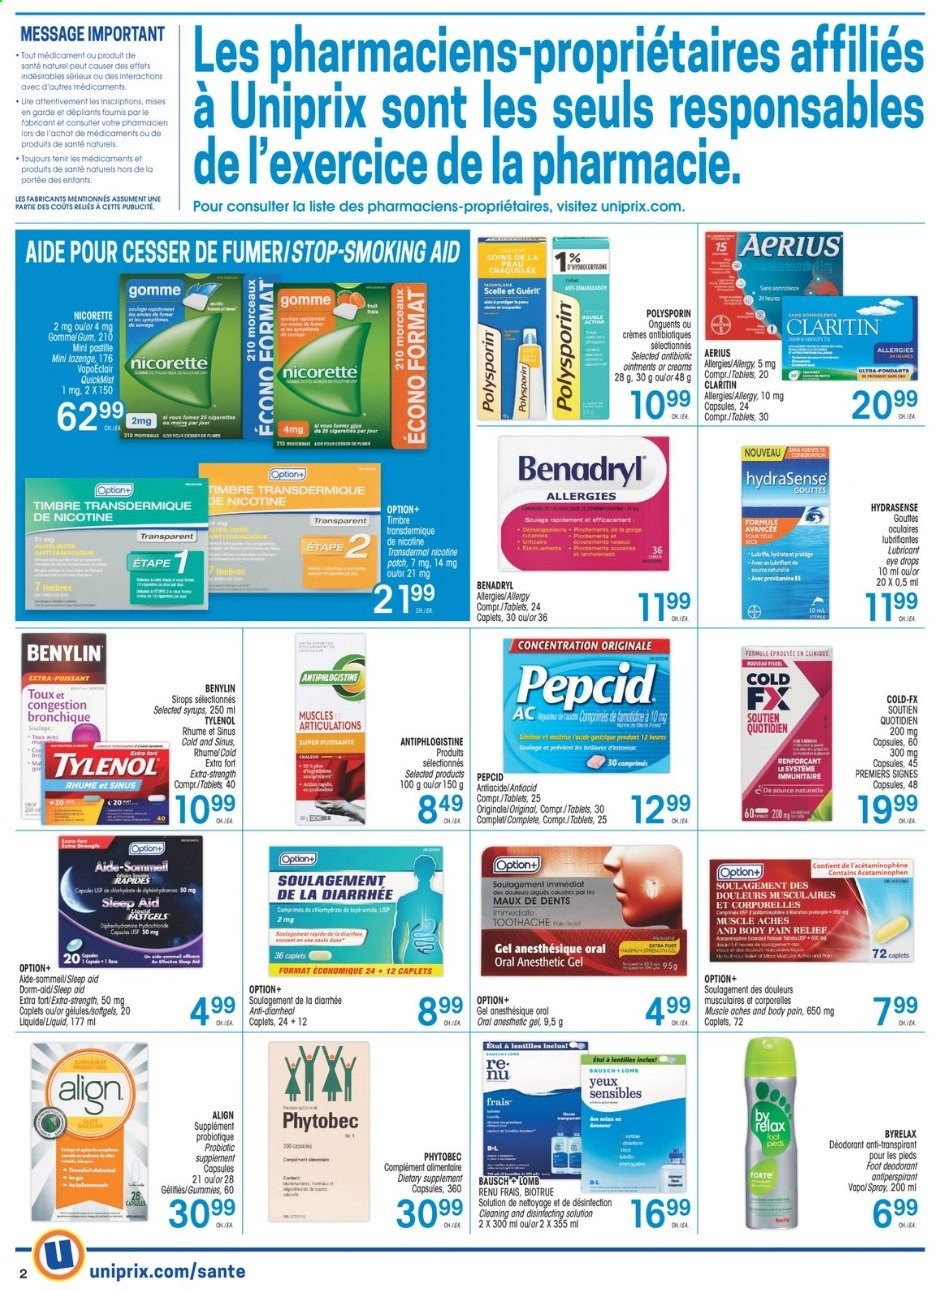 thumbnail - Uniprix Santé Flyer - April 08, 2021 - April 14, 2021 - Sales products - anti-perspirant, lubricant, pain relief, Nicorette, Tylenol, Pepcid, Biotrue, eye drops, Benylin, dietary supplement, deodorant. Page 2.